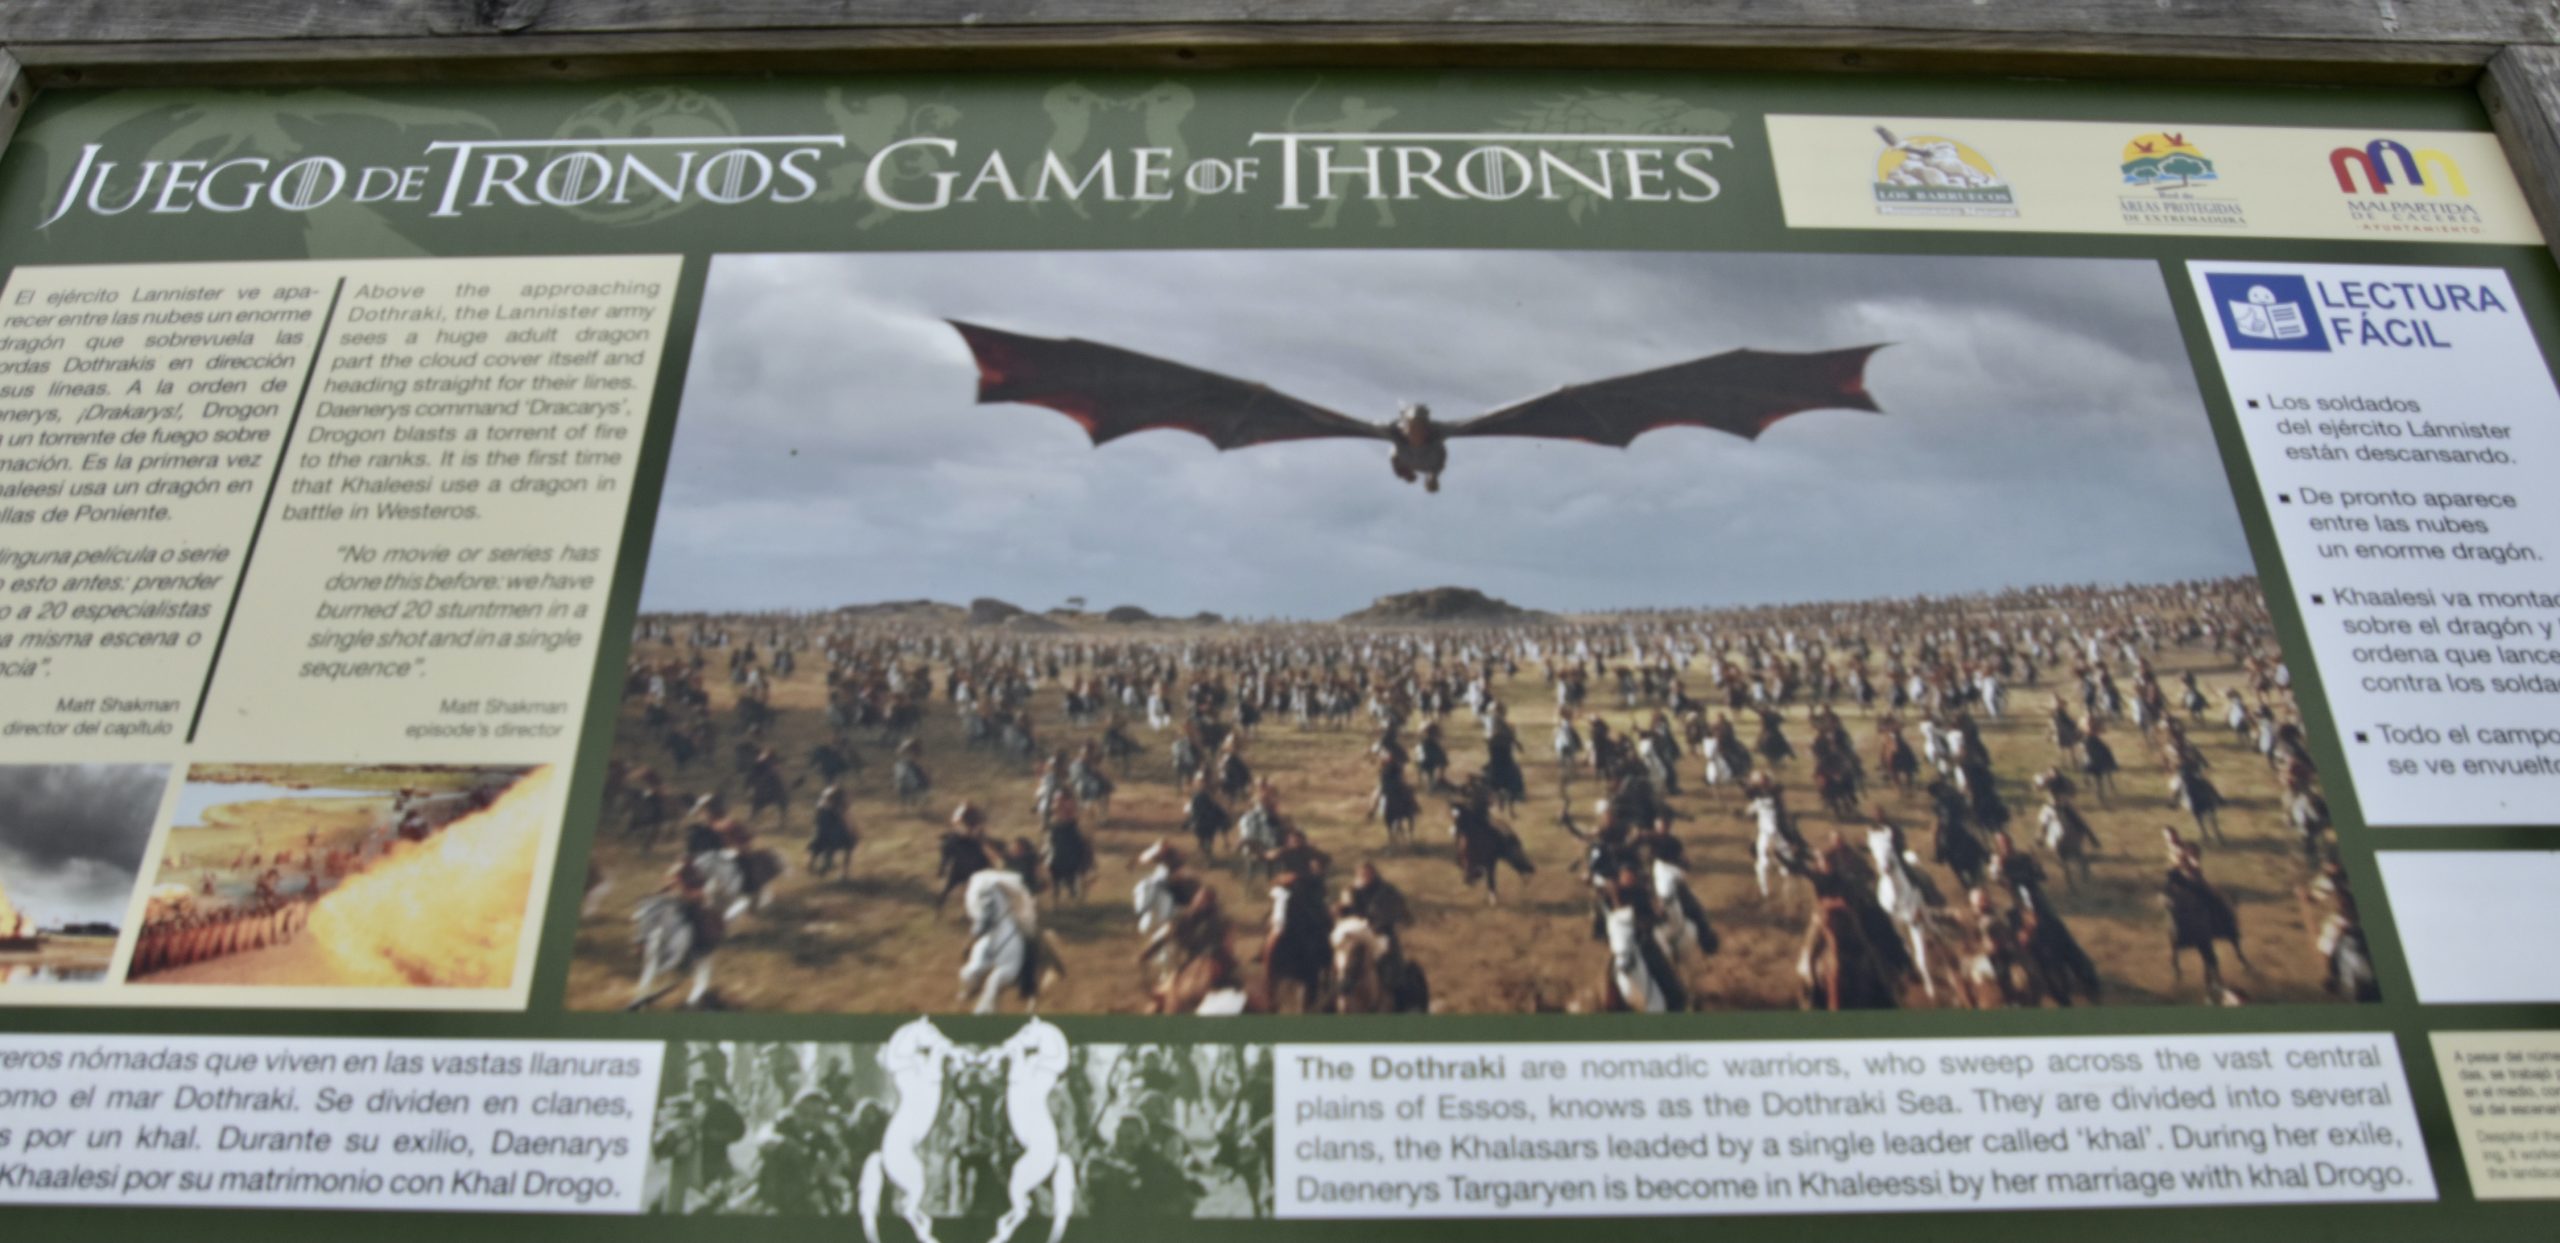 Game of Thrones Panel, Los Barrucoes, Extremadura